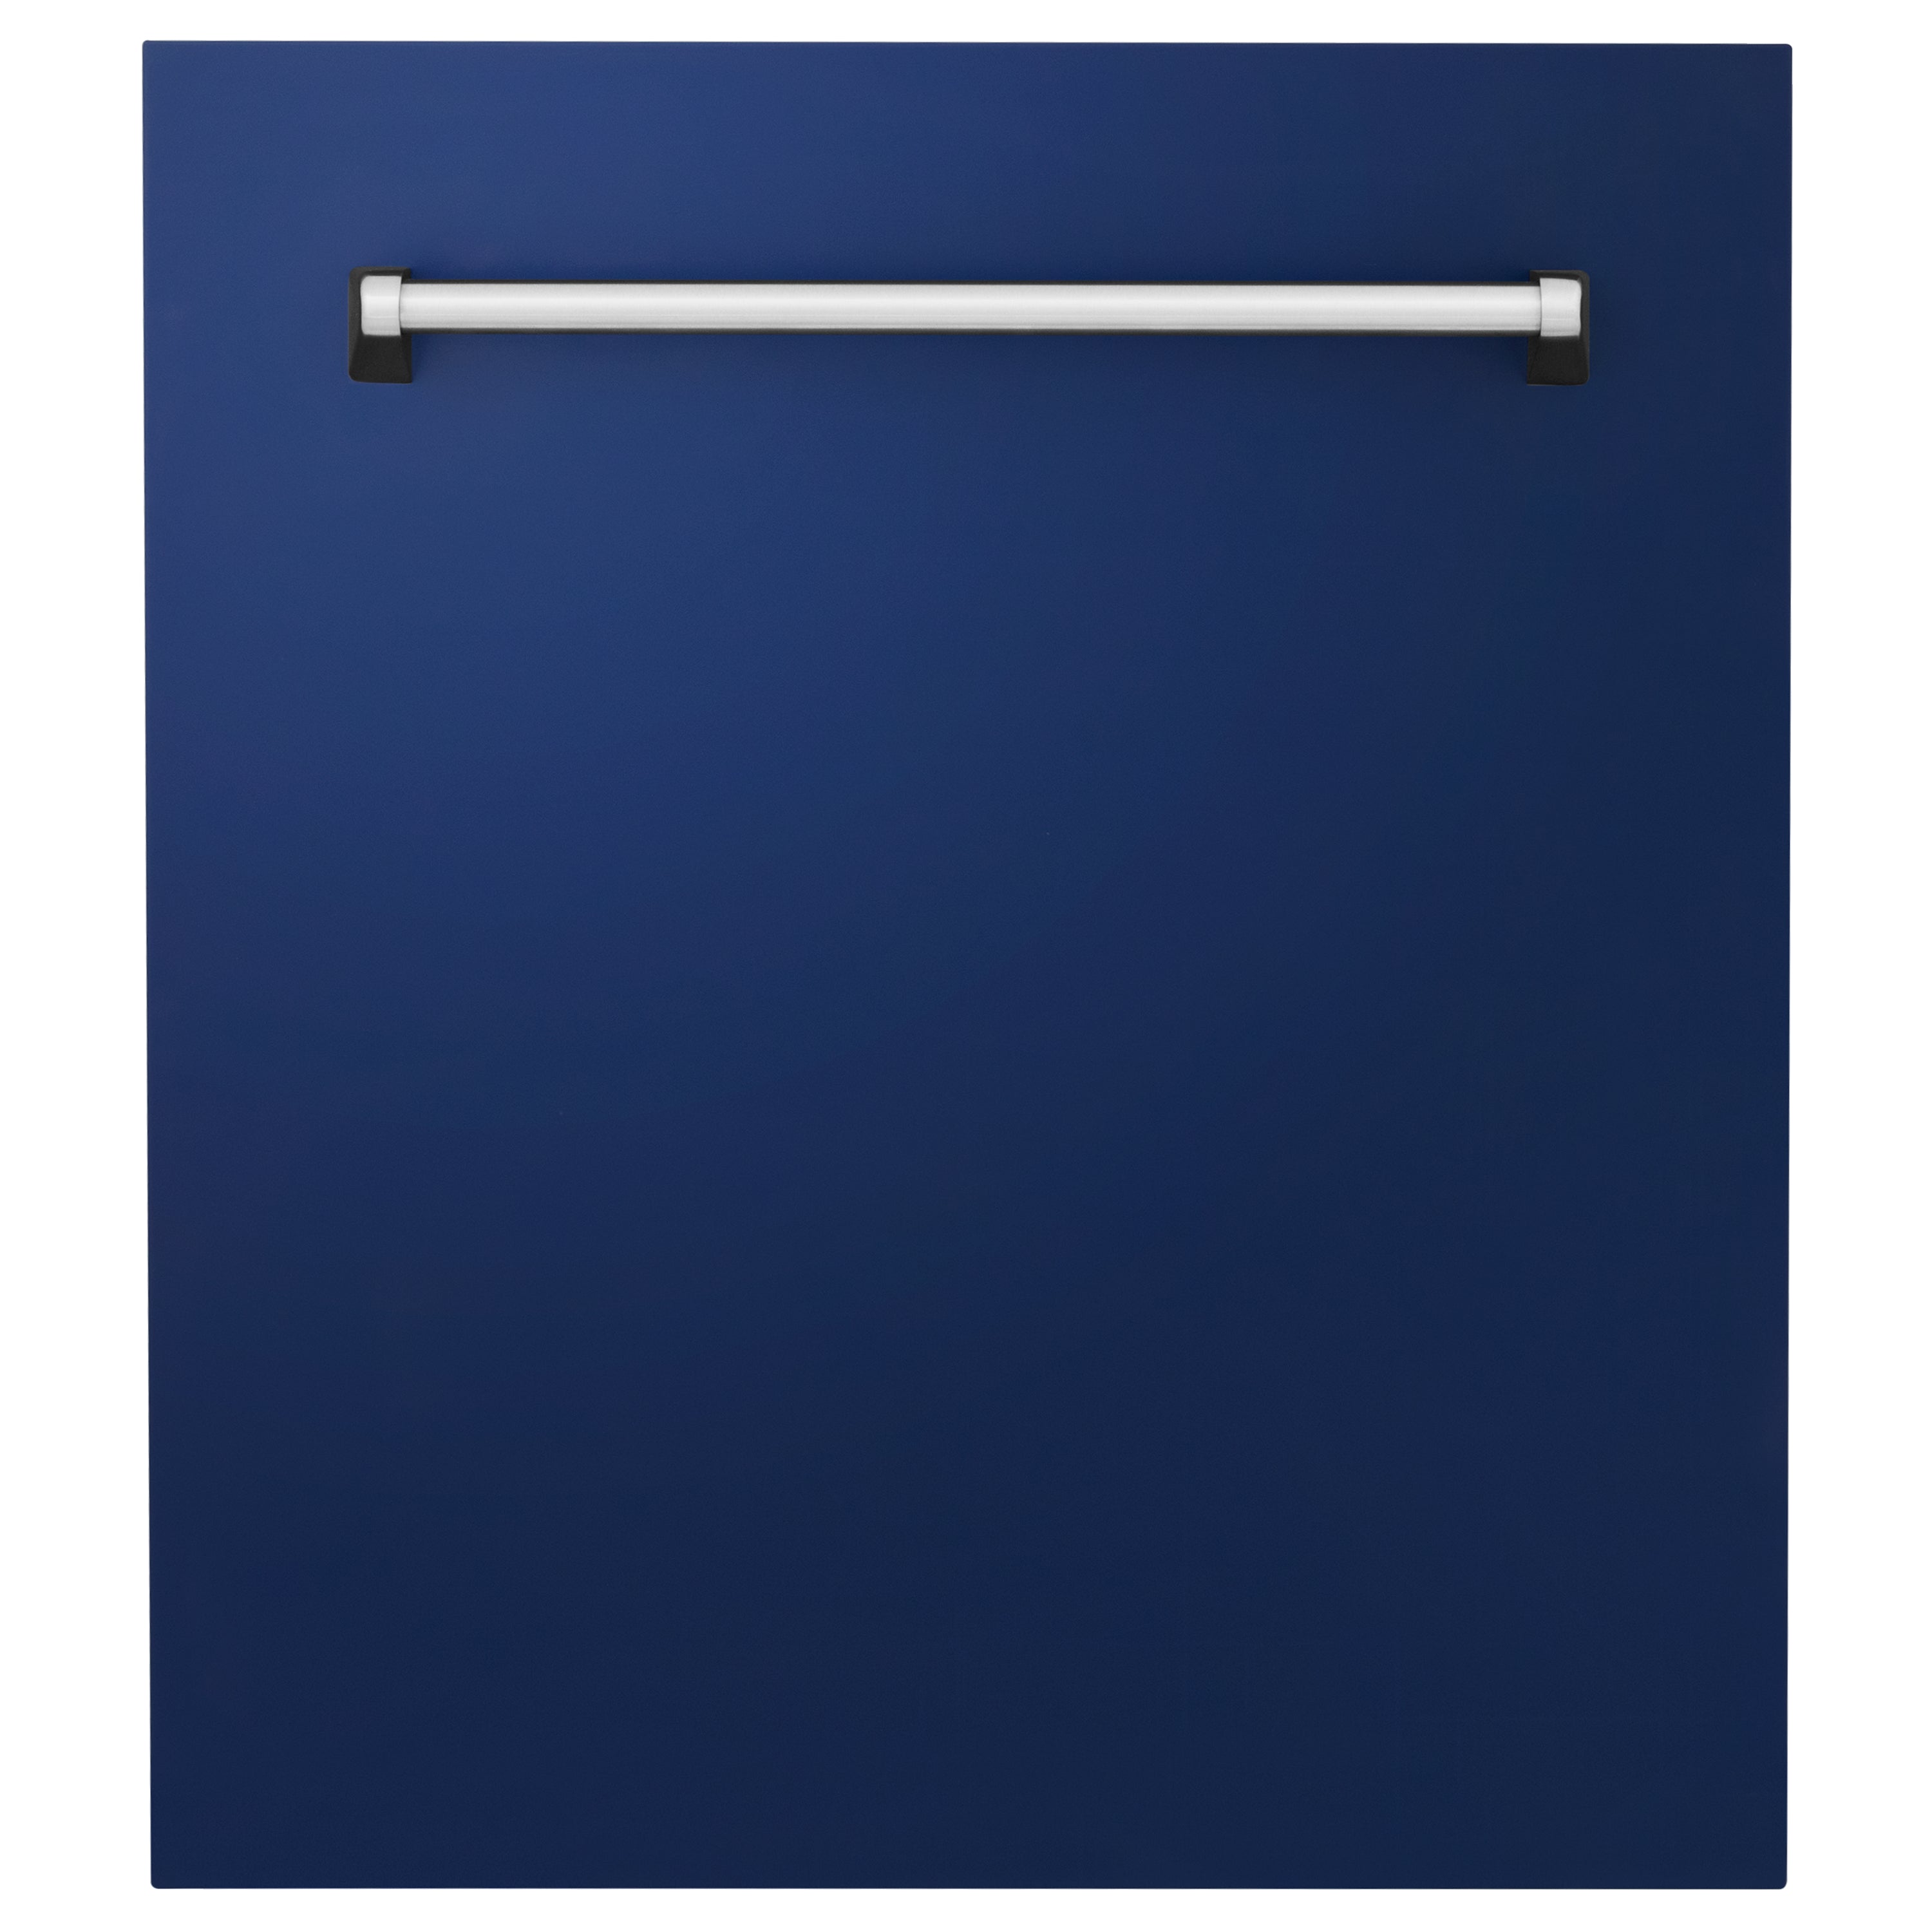 ZLINE 24" Tallac Series 3rd Rack Tall Tub Dishwasher in Blue Gloss with Stainless Steel Tub, 51dBa (DWV-BG-24)